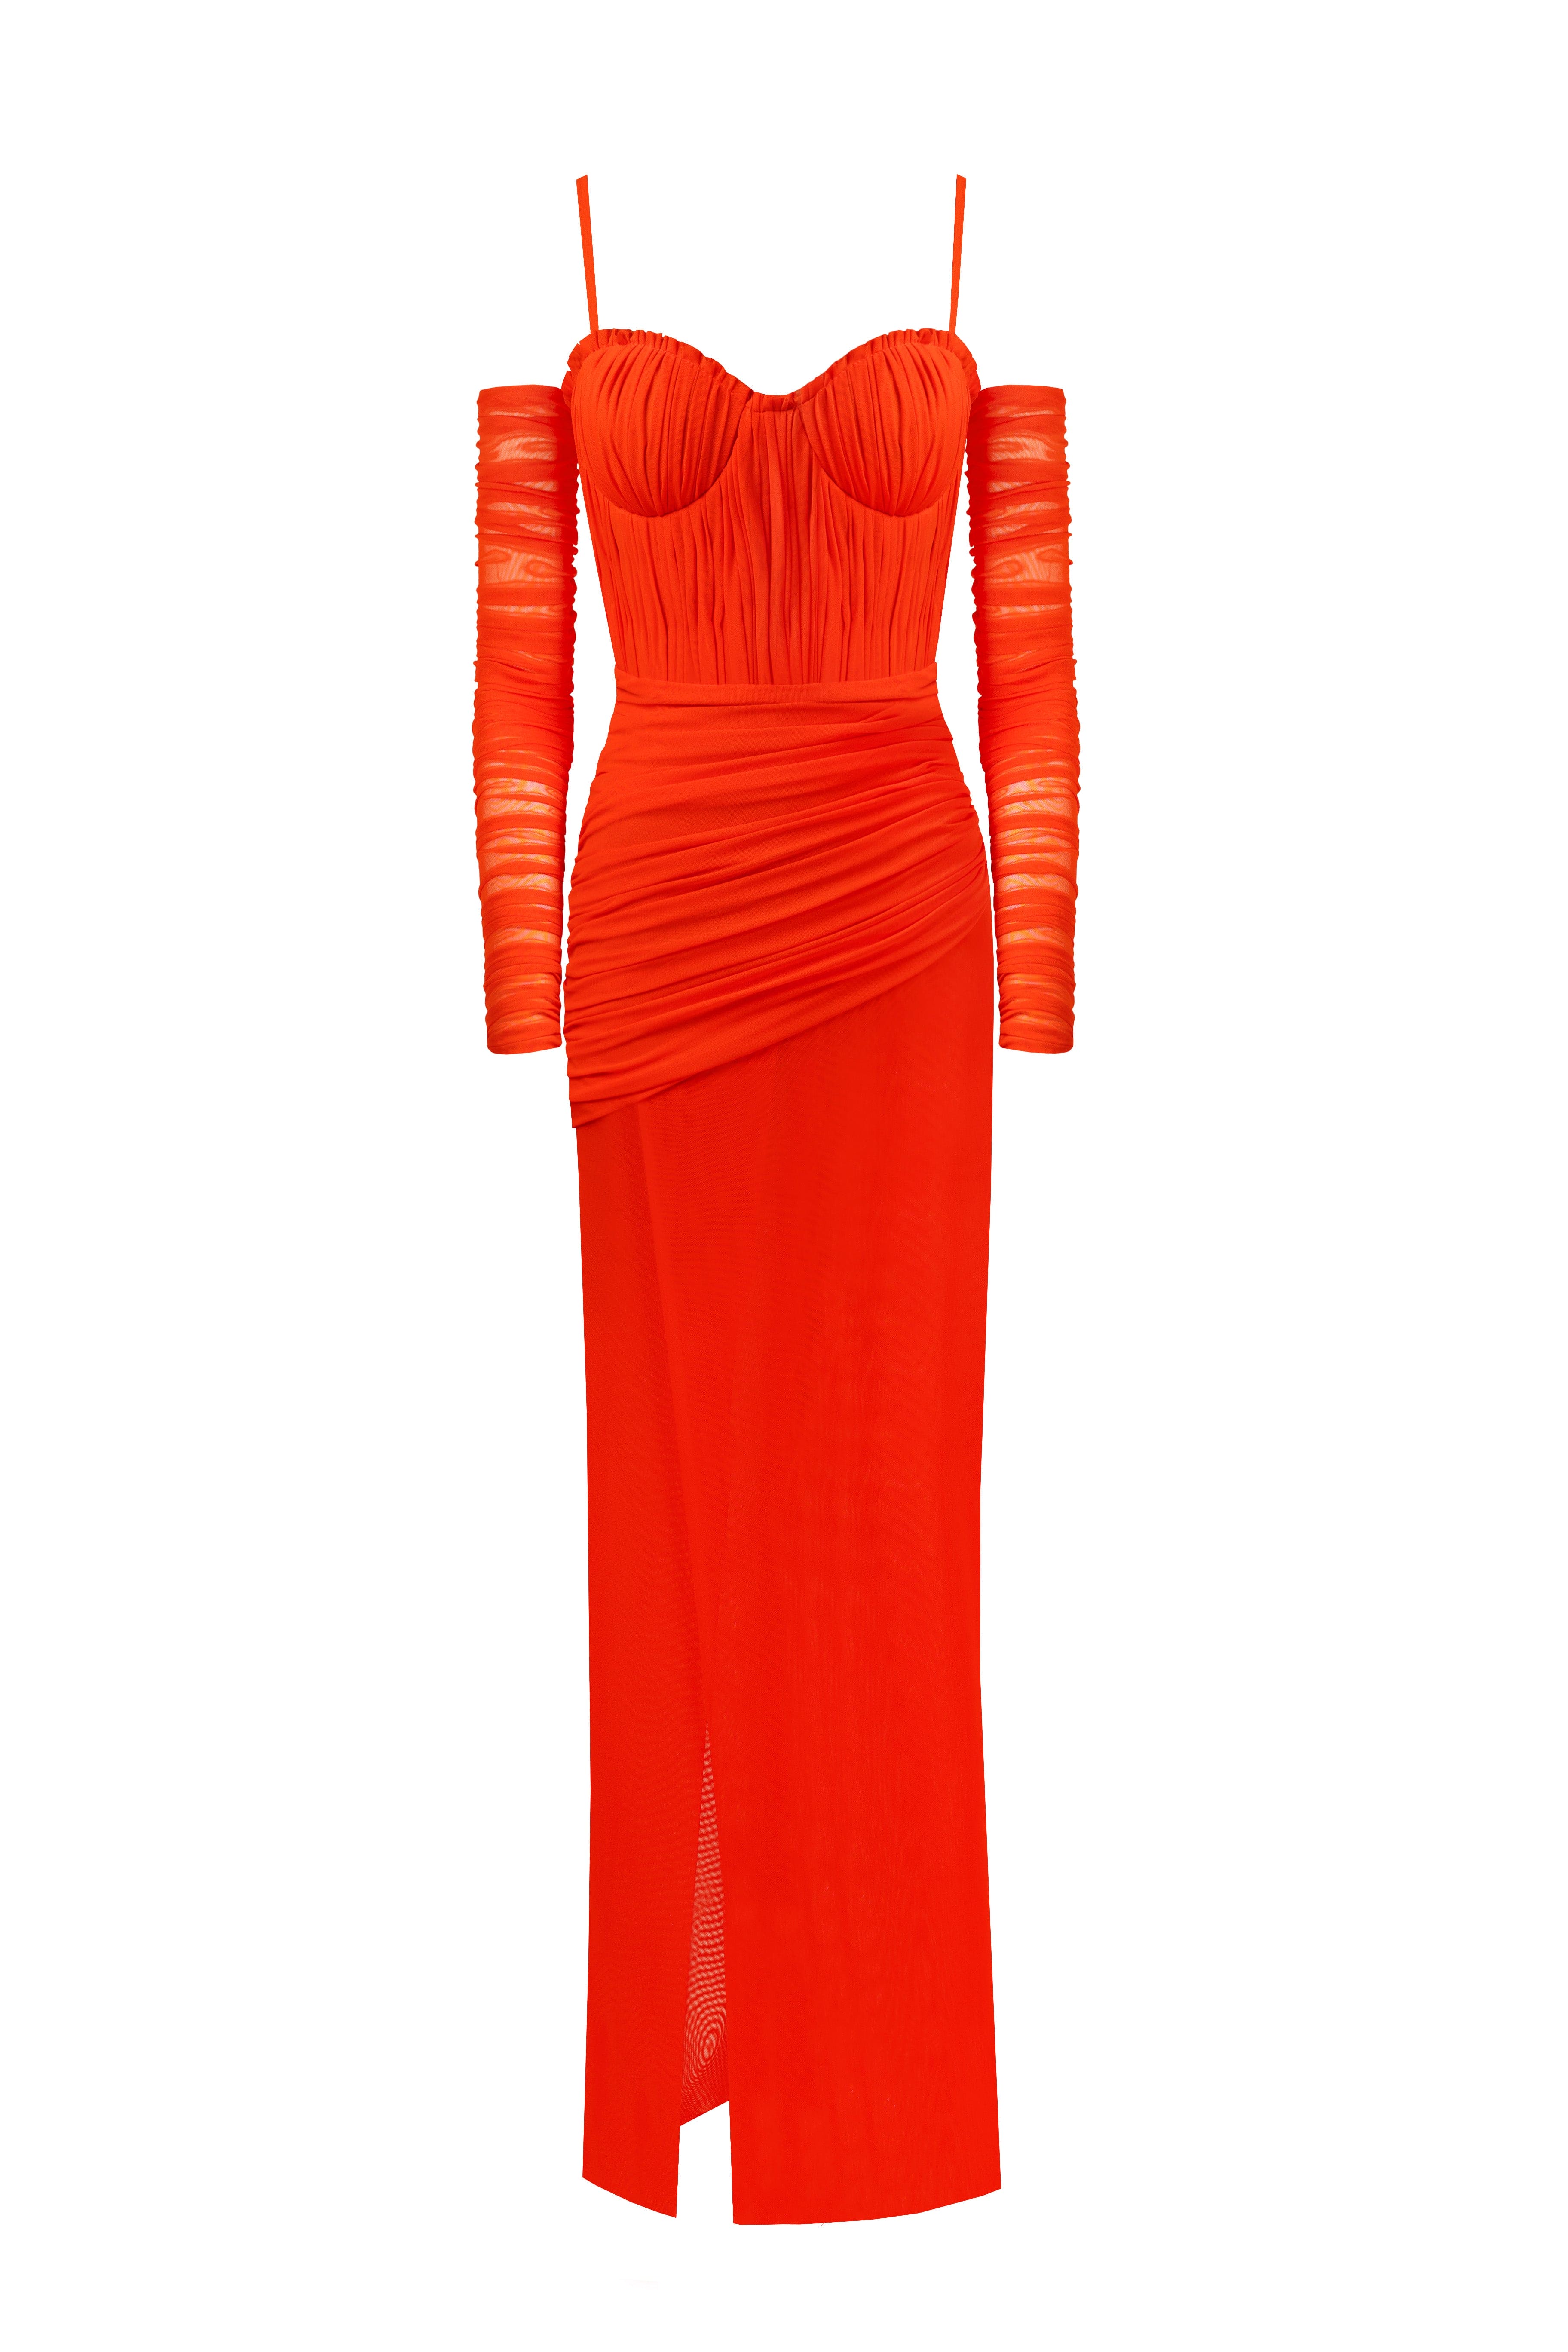 Flamboyant coral bustier maxi dress